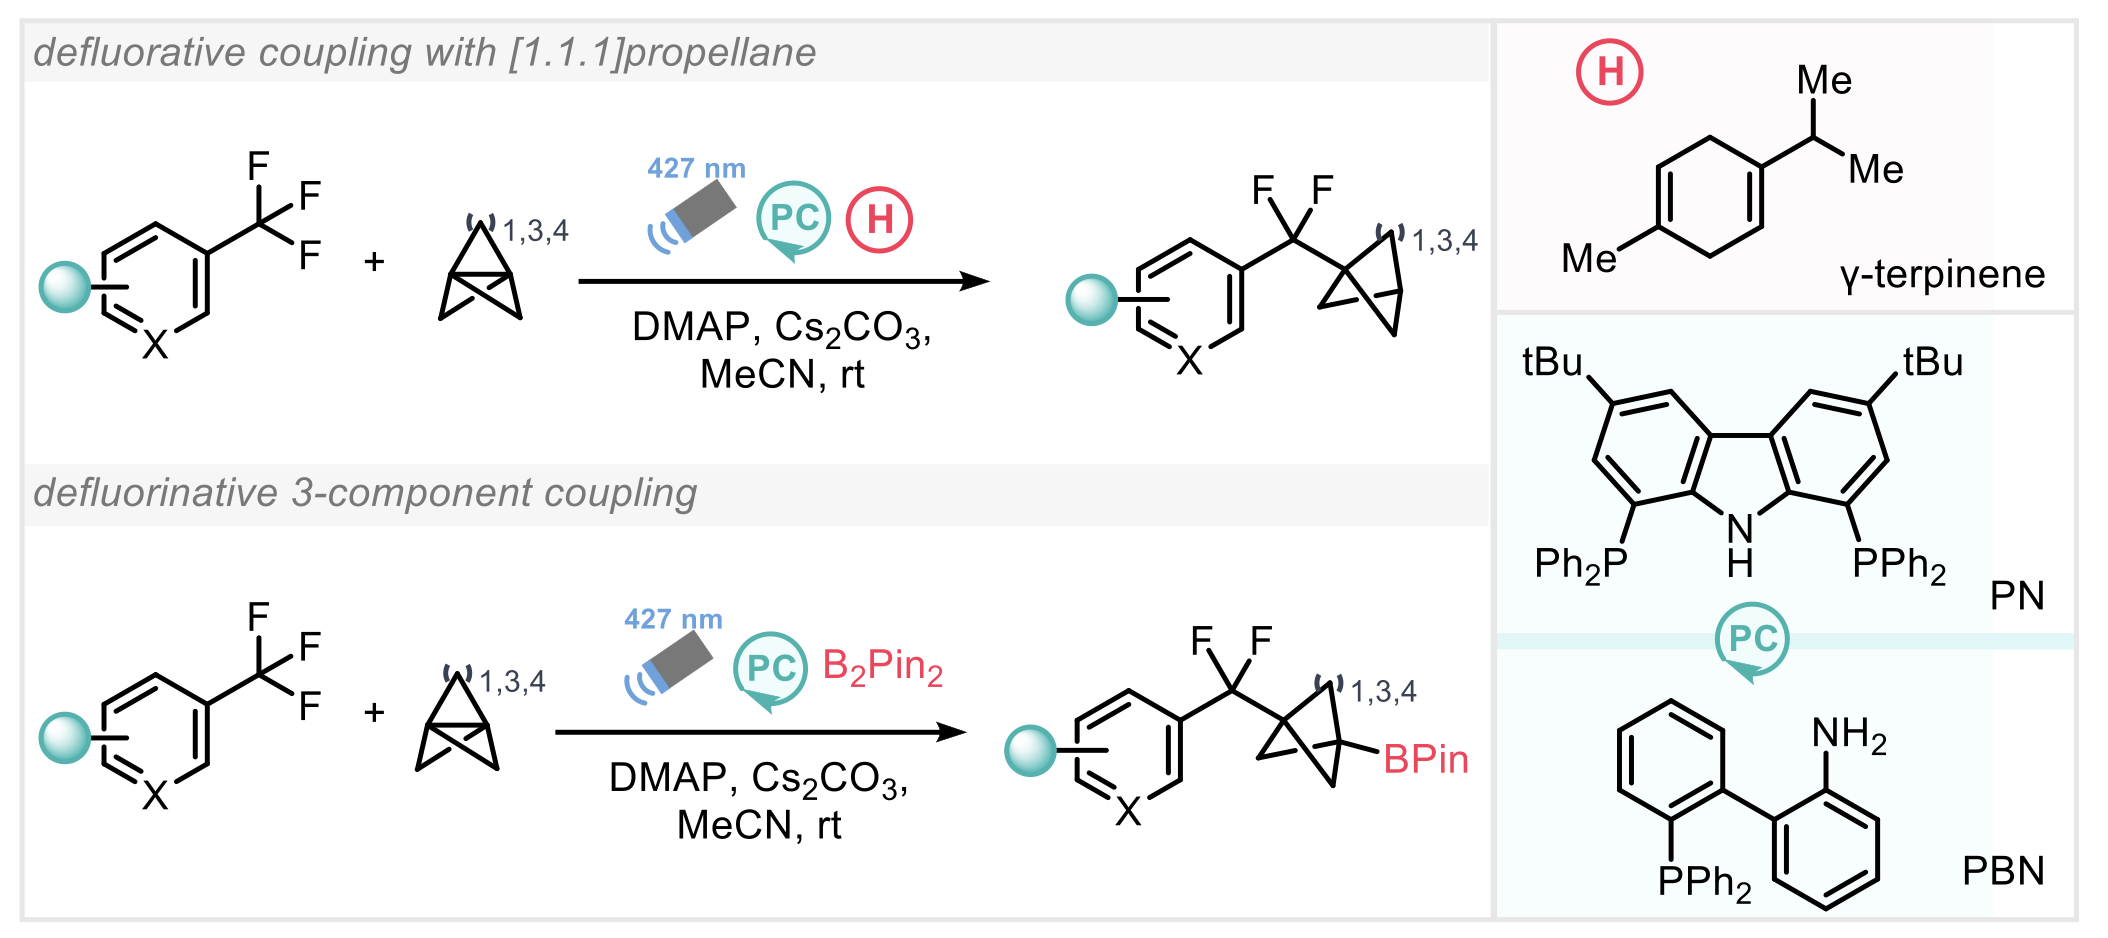 Top: Defluorinative coupling with [1.1.1]propellane; Bottom: Deflorinative 3-component coupling.